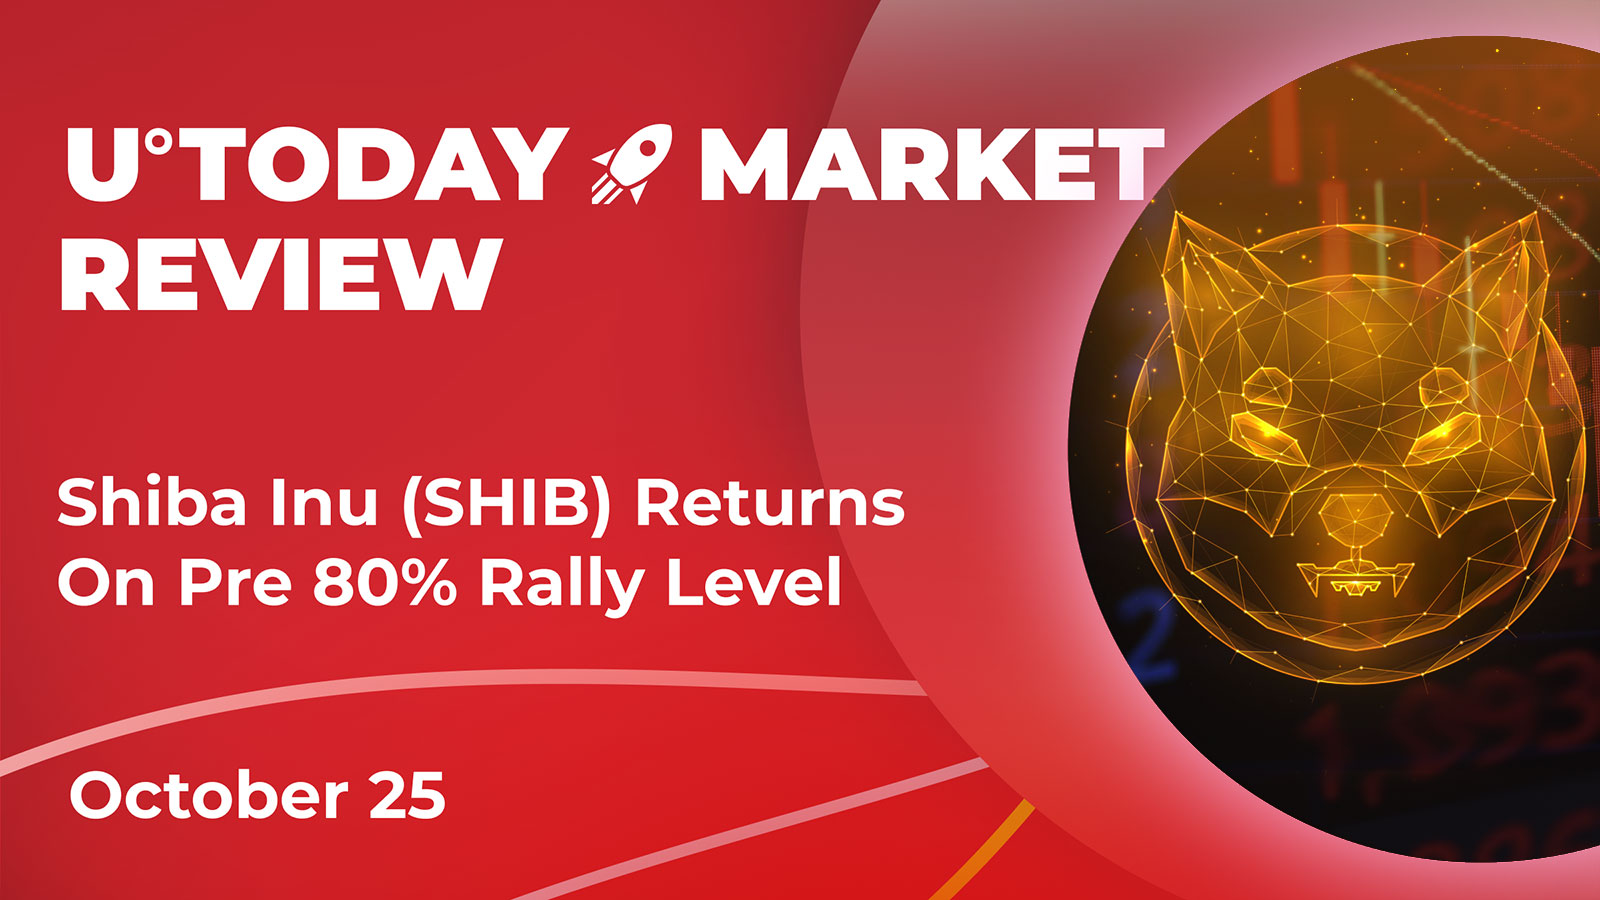 Shiba Inu (SHIB) Returns On Pre 80% Rally Level: Crypto Market Review, October 25